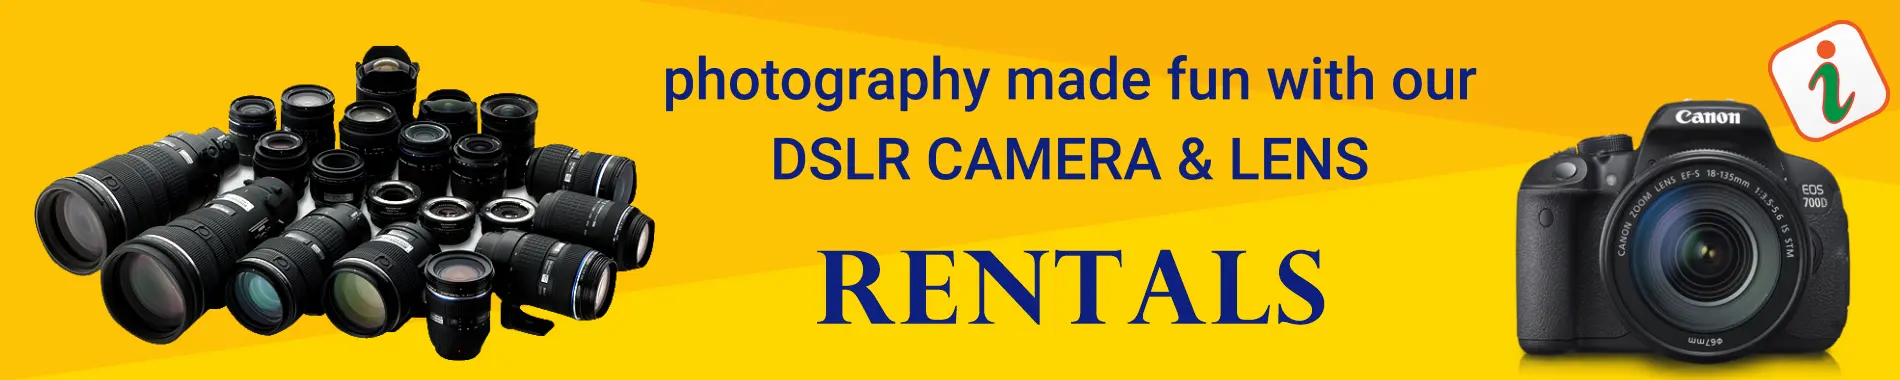 DSLR Camera and Lenses on Rent